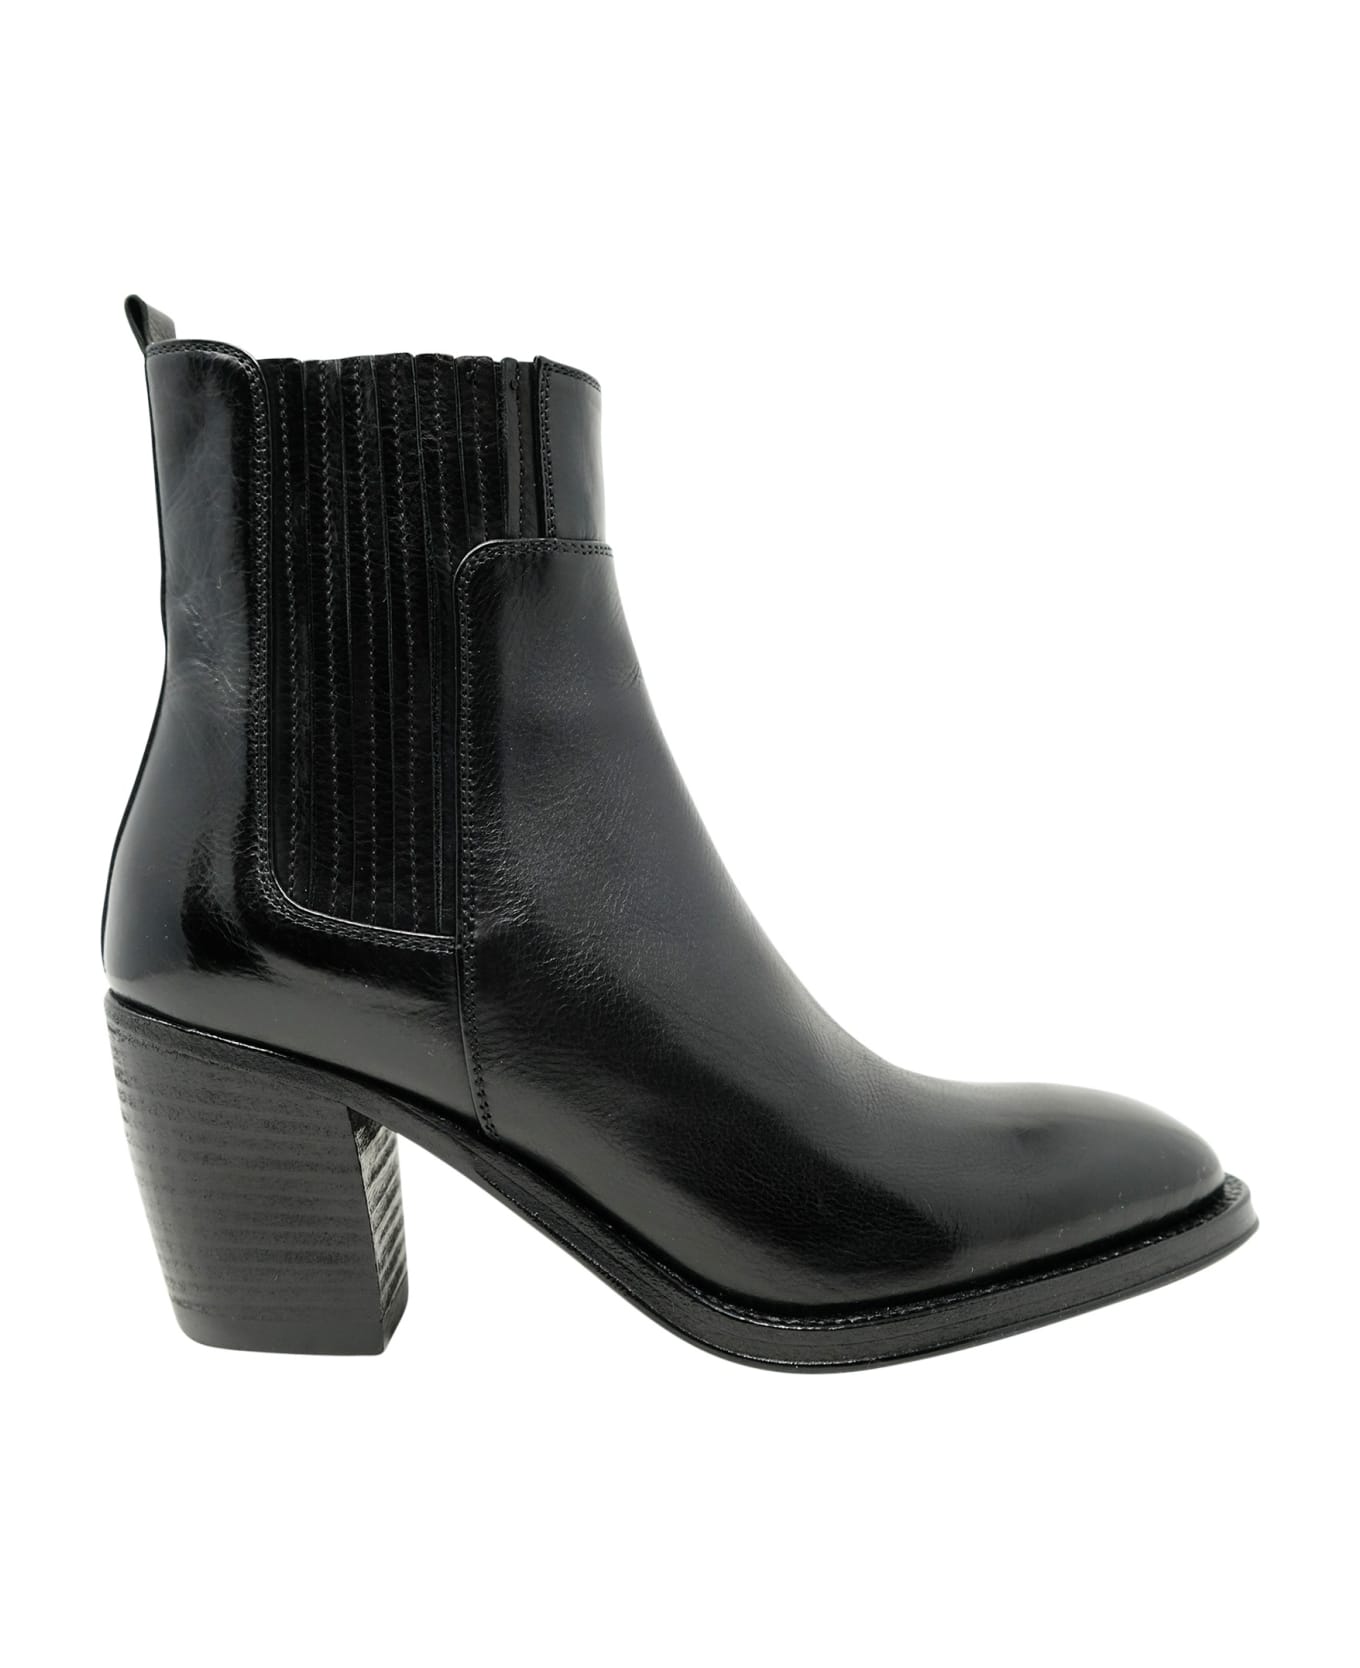 Alberto Fasciani Black Leather Ankle Boots